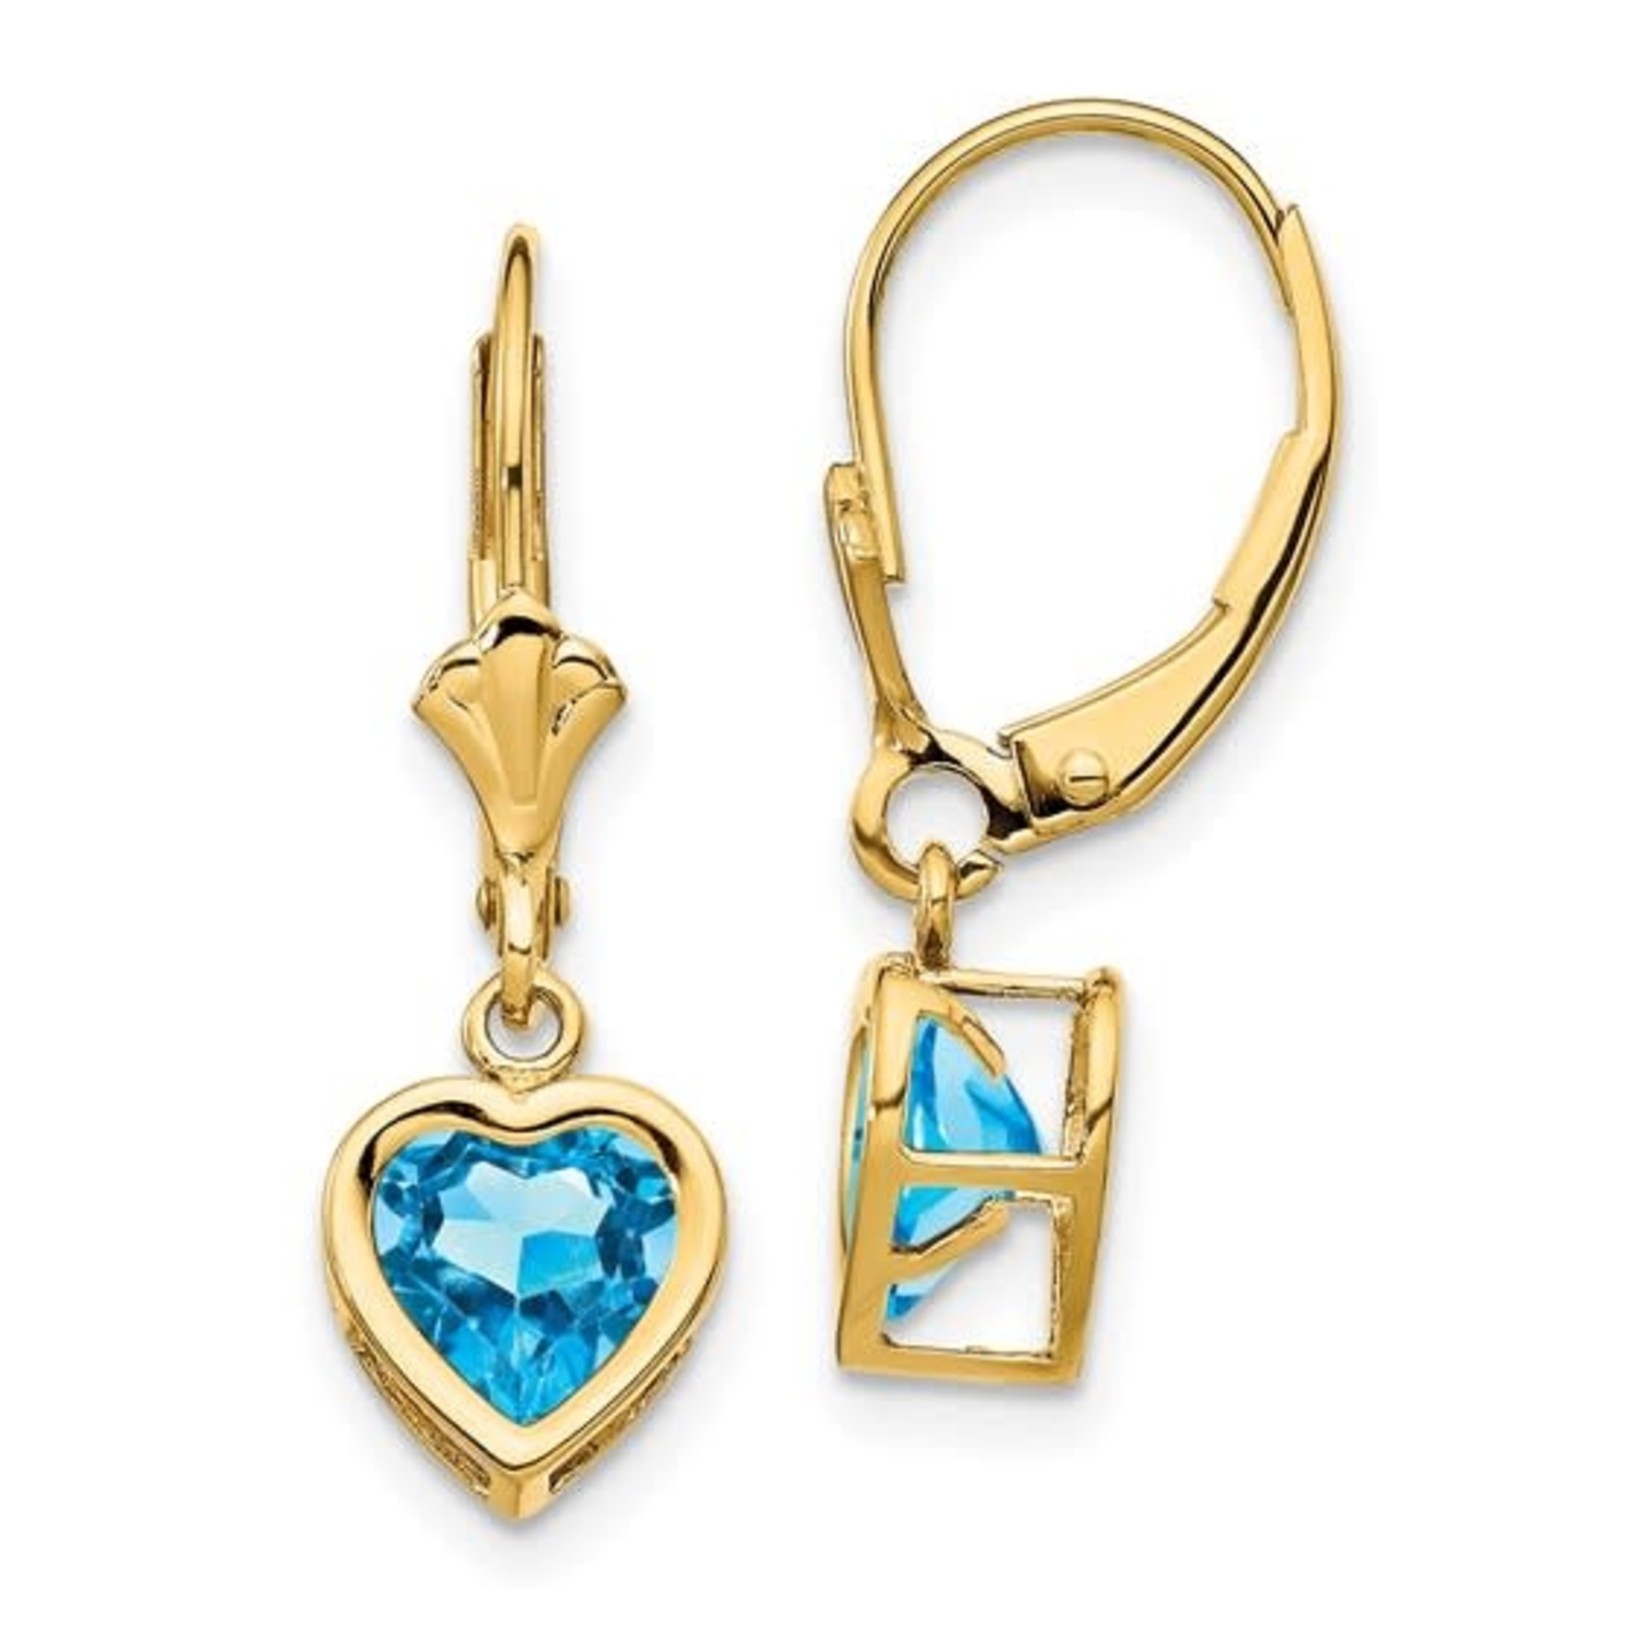 QUALITY GOLD OF CINCINNATI INC 14K 6mm Heart Blue Topaz Leverback Earrings